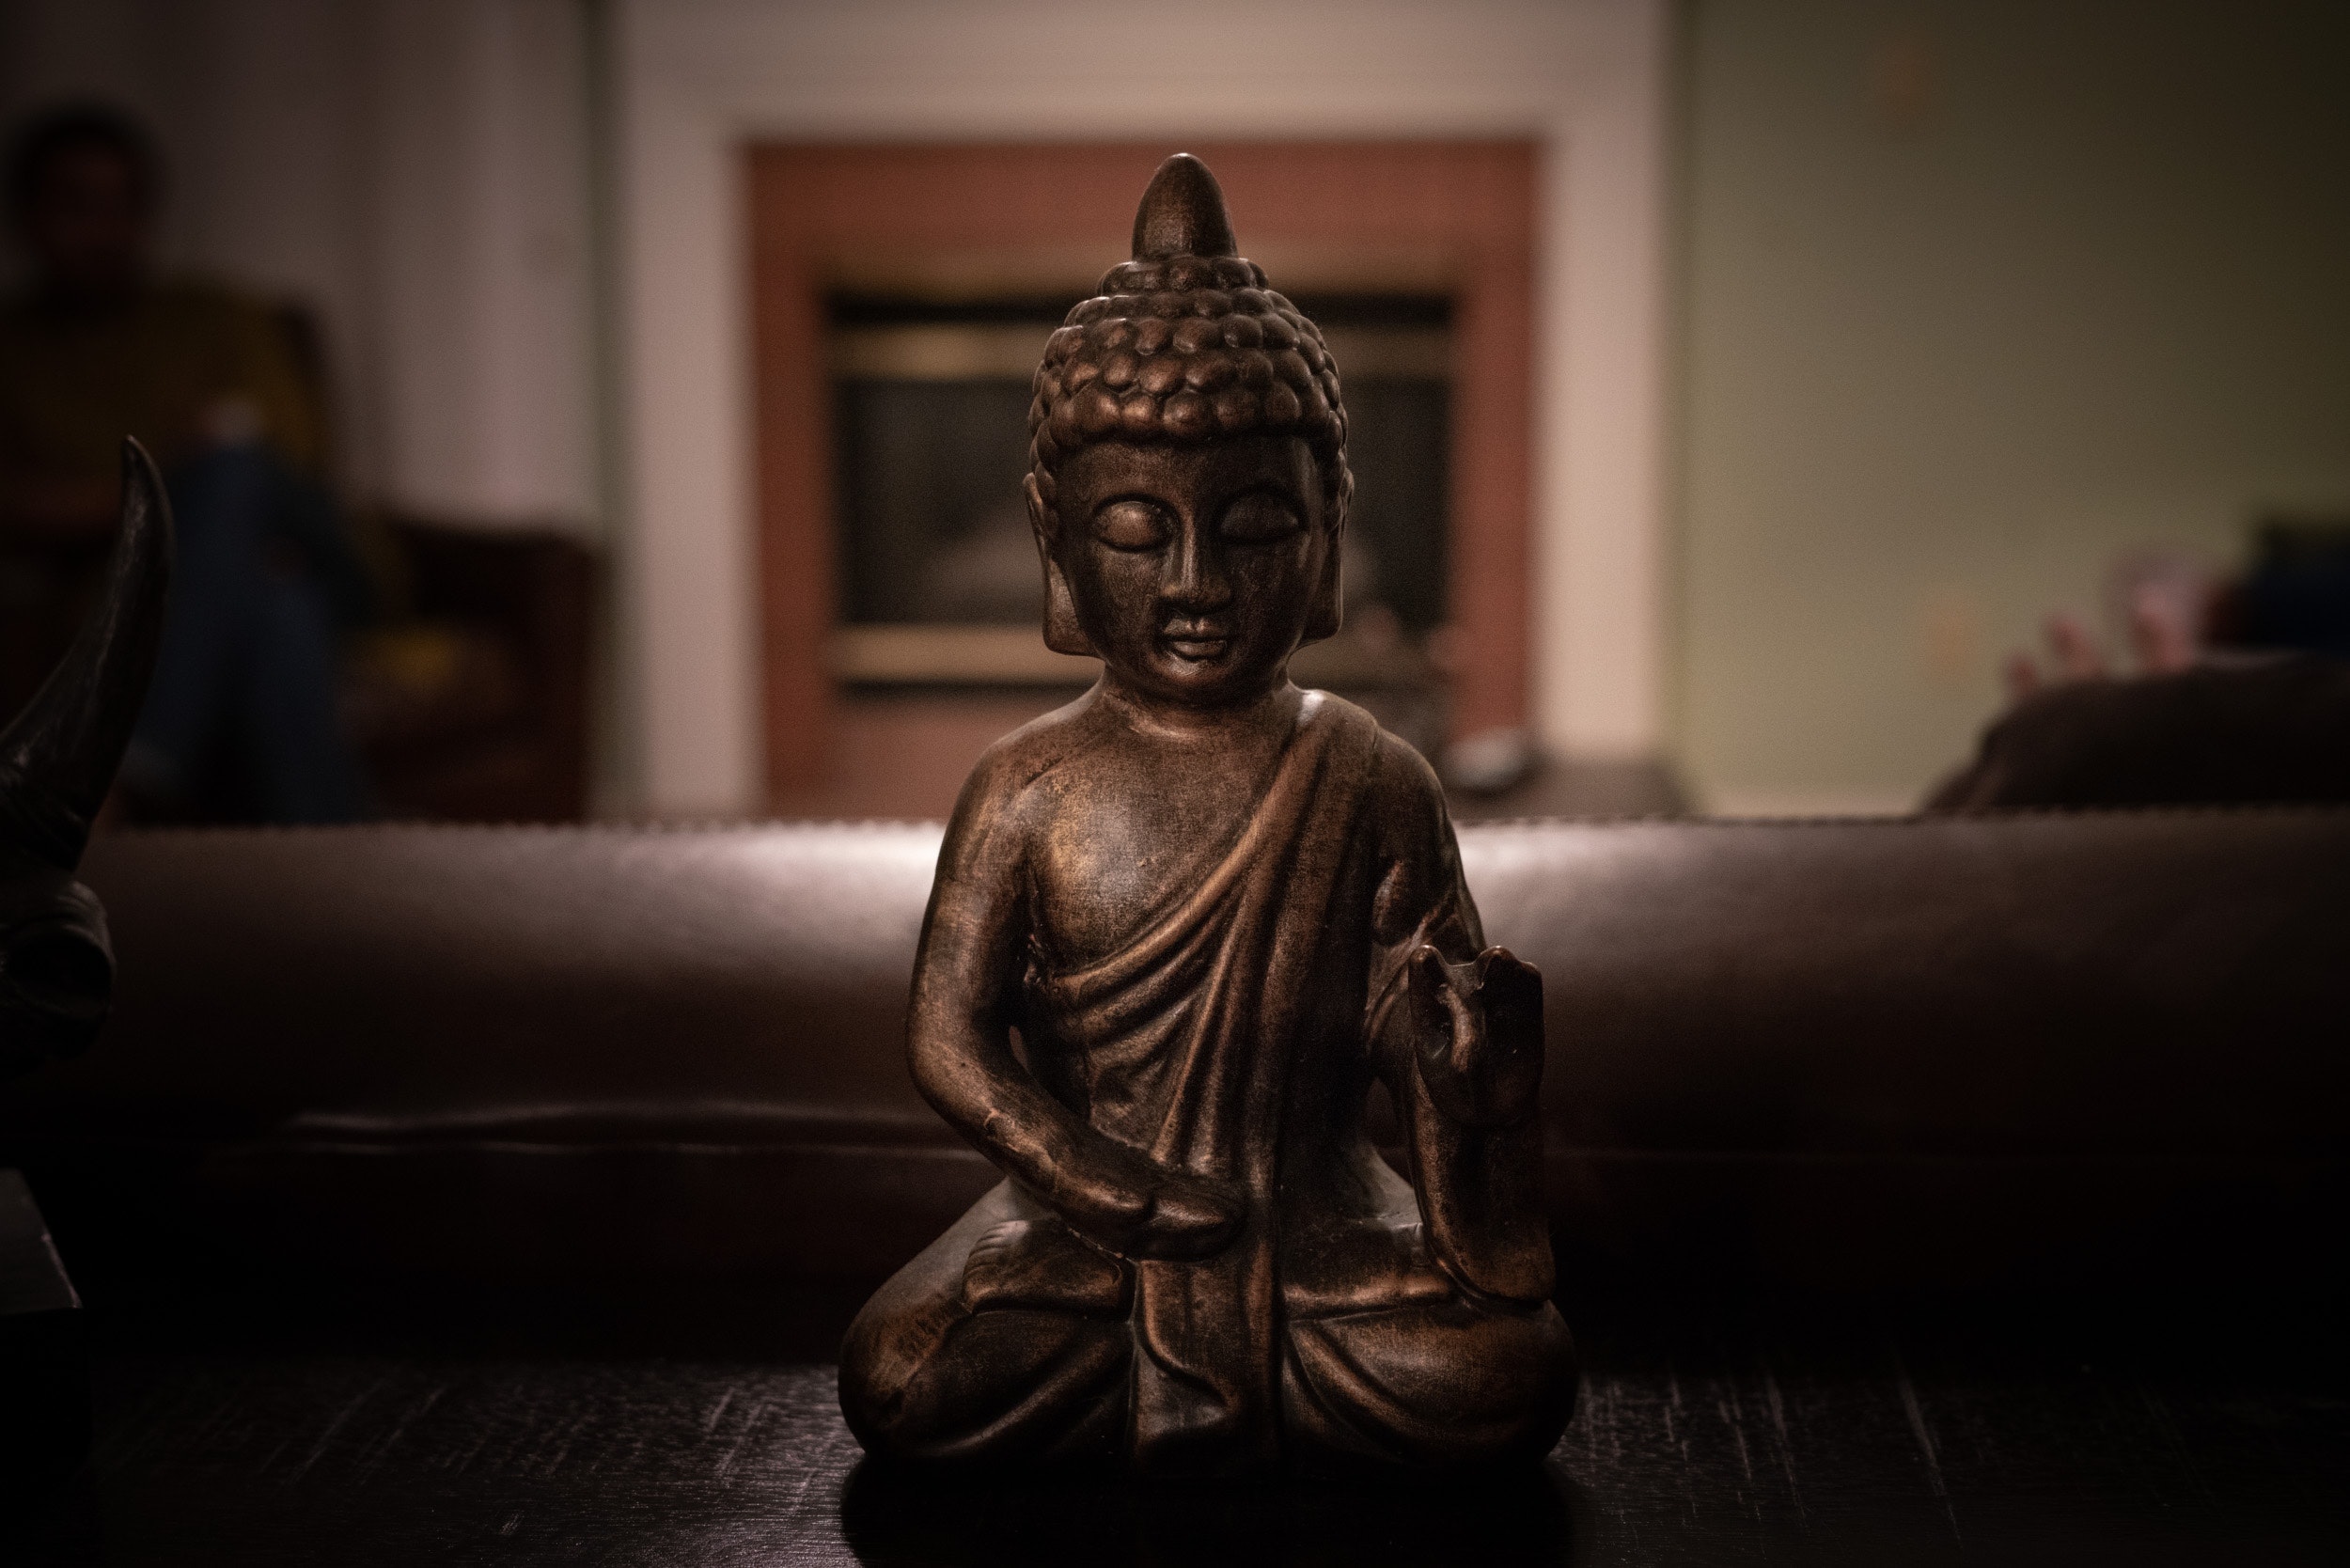 brass Buddha figurine on a black surface image